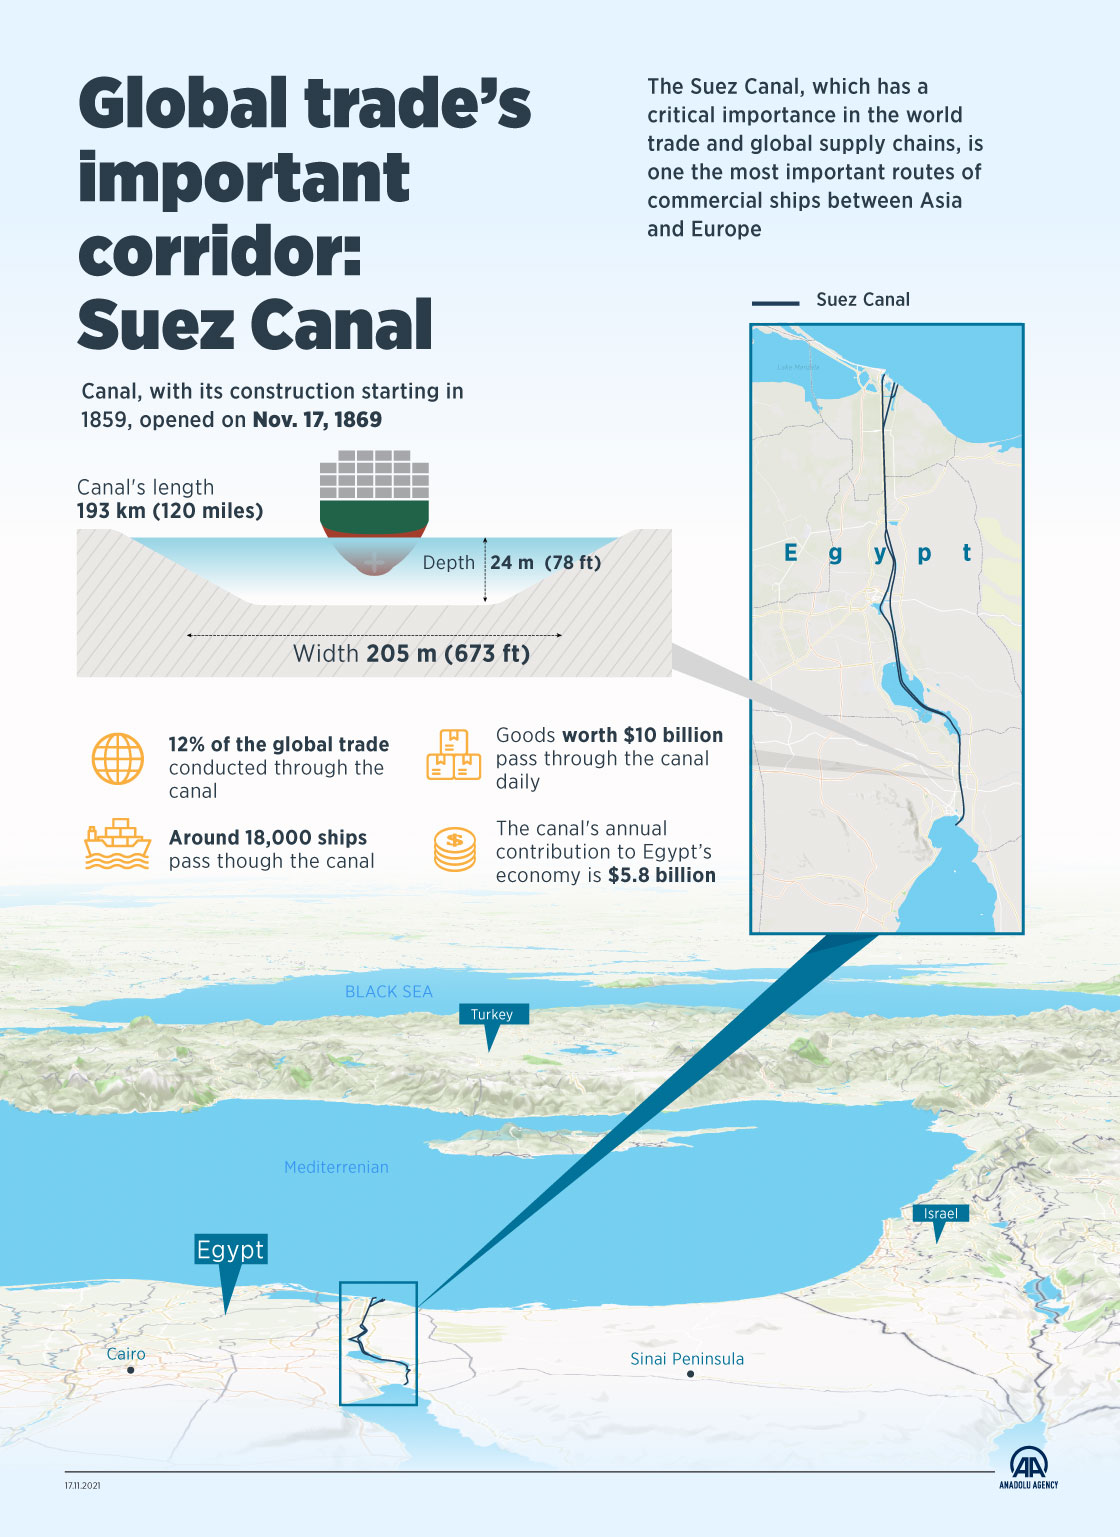 Global trade’s important corridor: Suez Canal